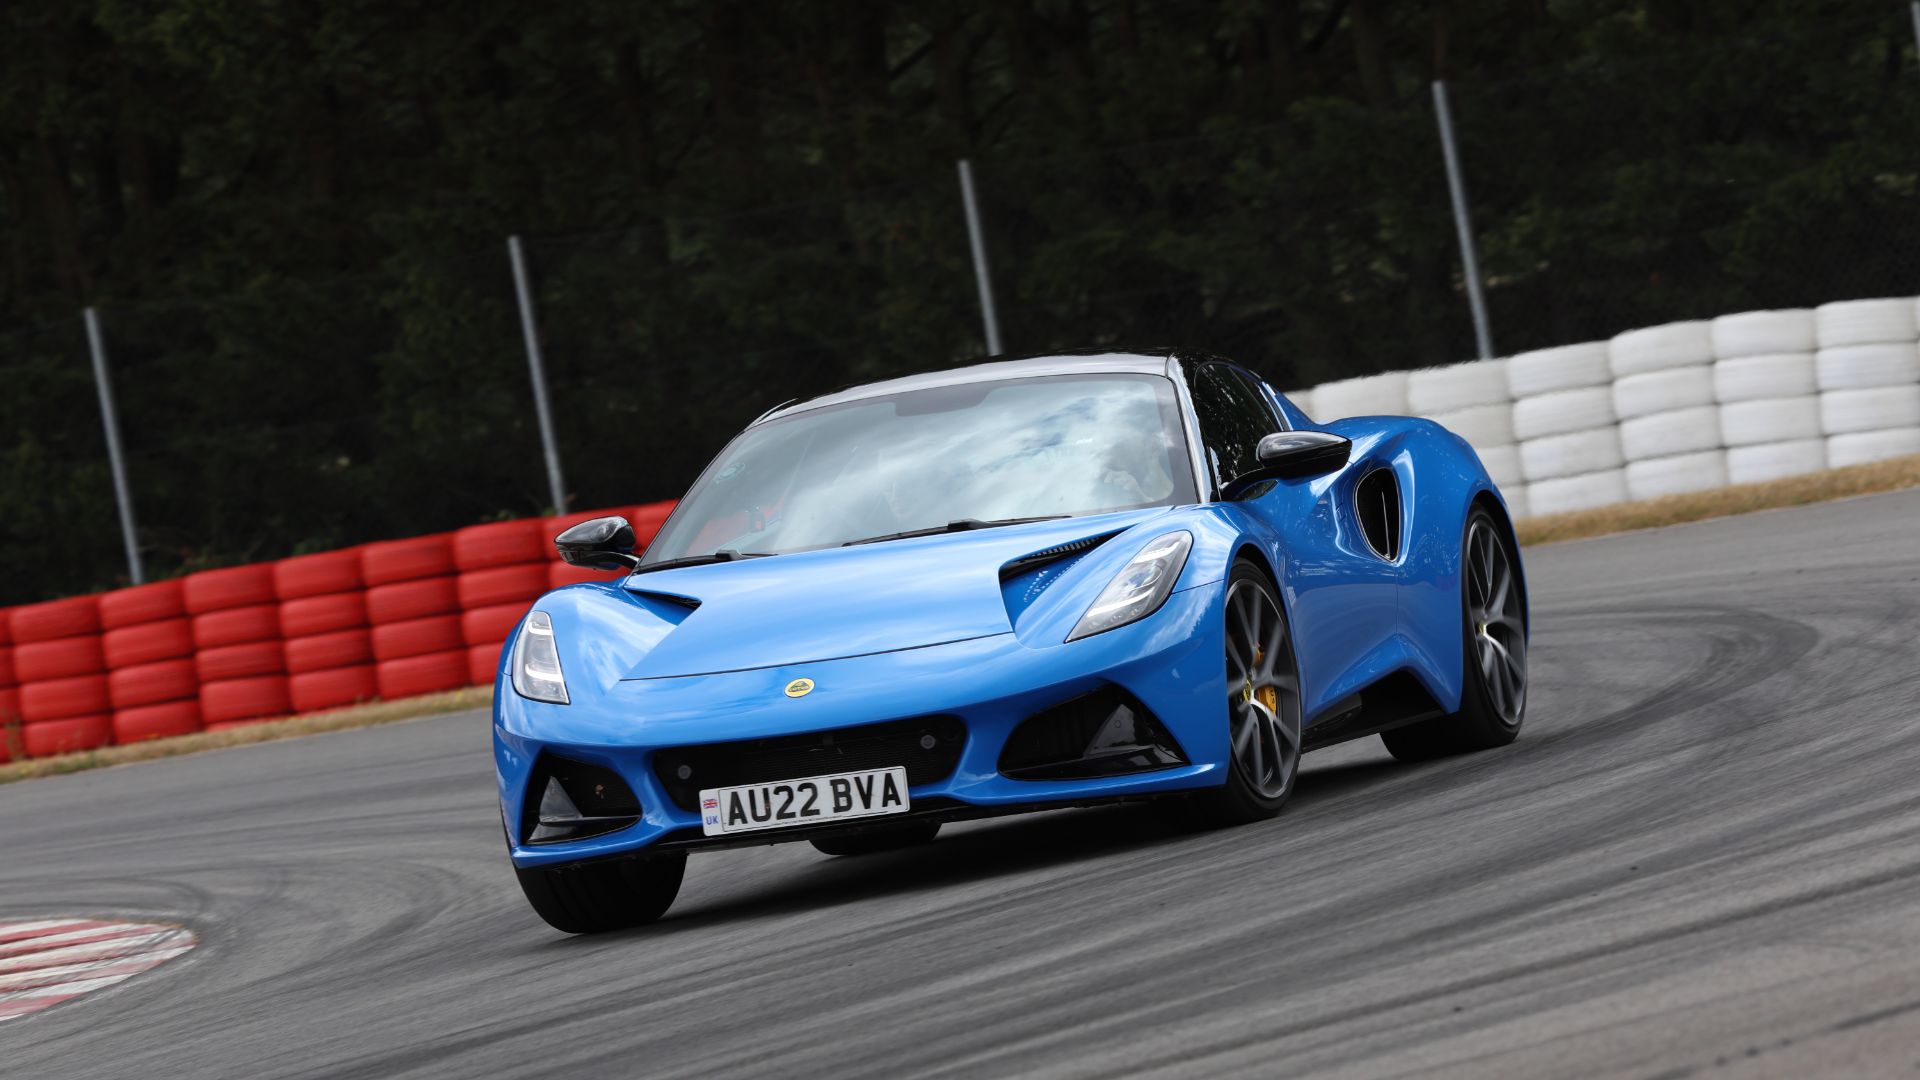 Lotus Evora GT Review: A Sports Car Love Affair